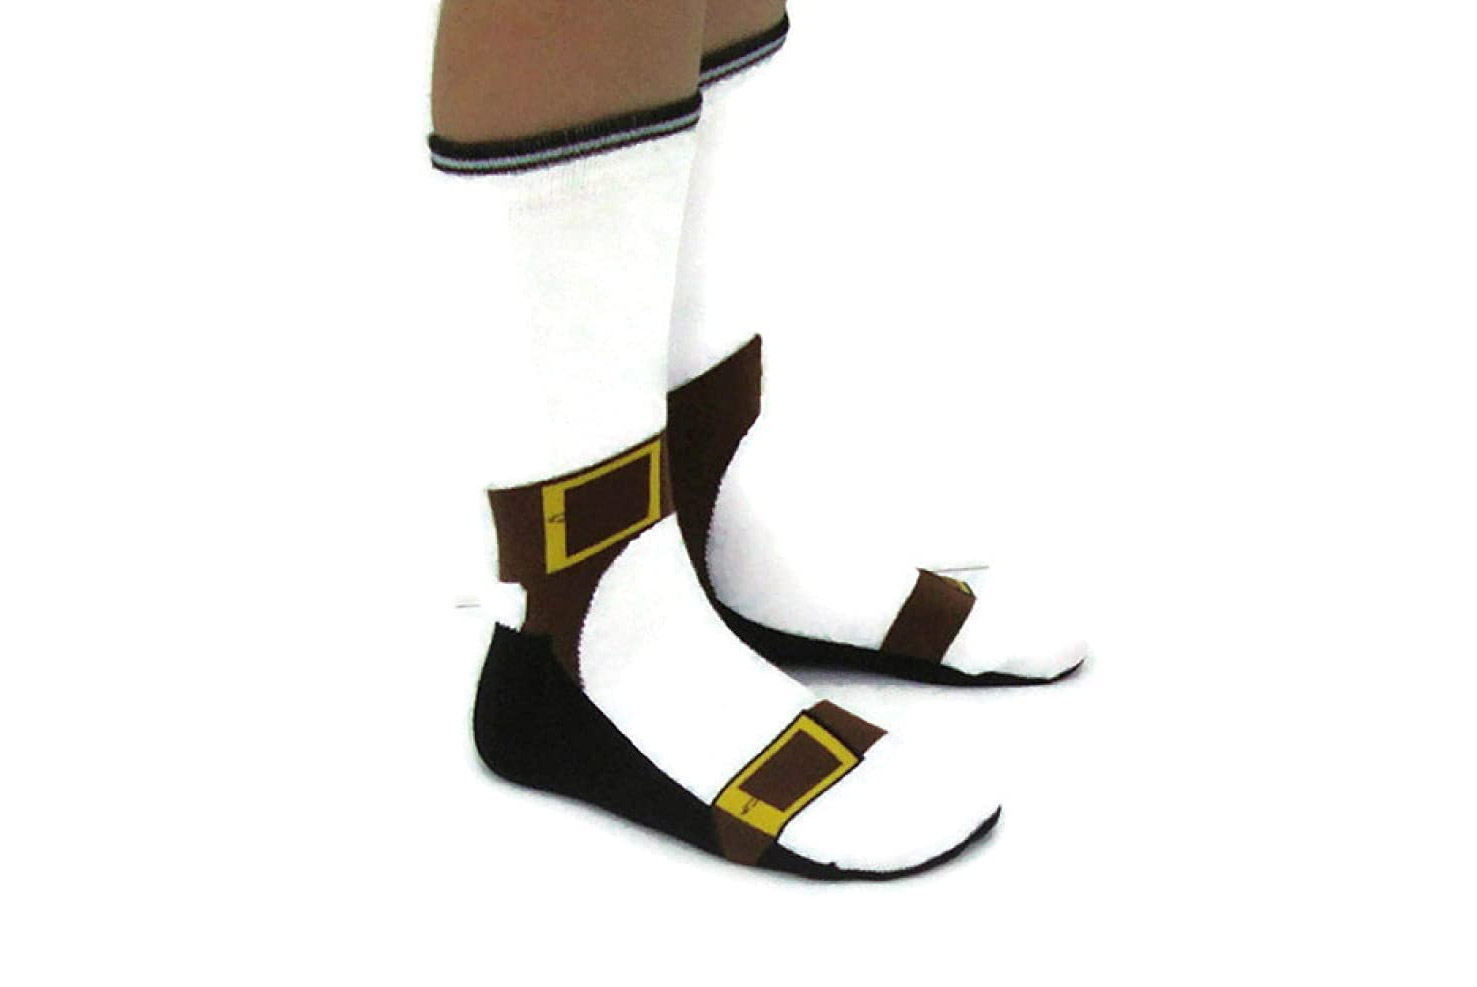 Sandal Socks Make It Look Like You're Wearing Birkenstock Sandals - Fake funny sandal socks